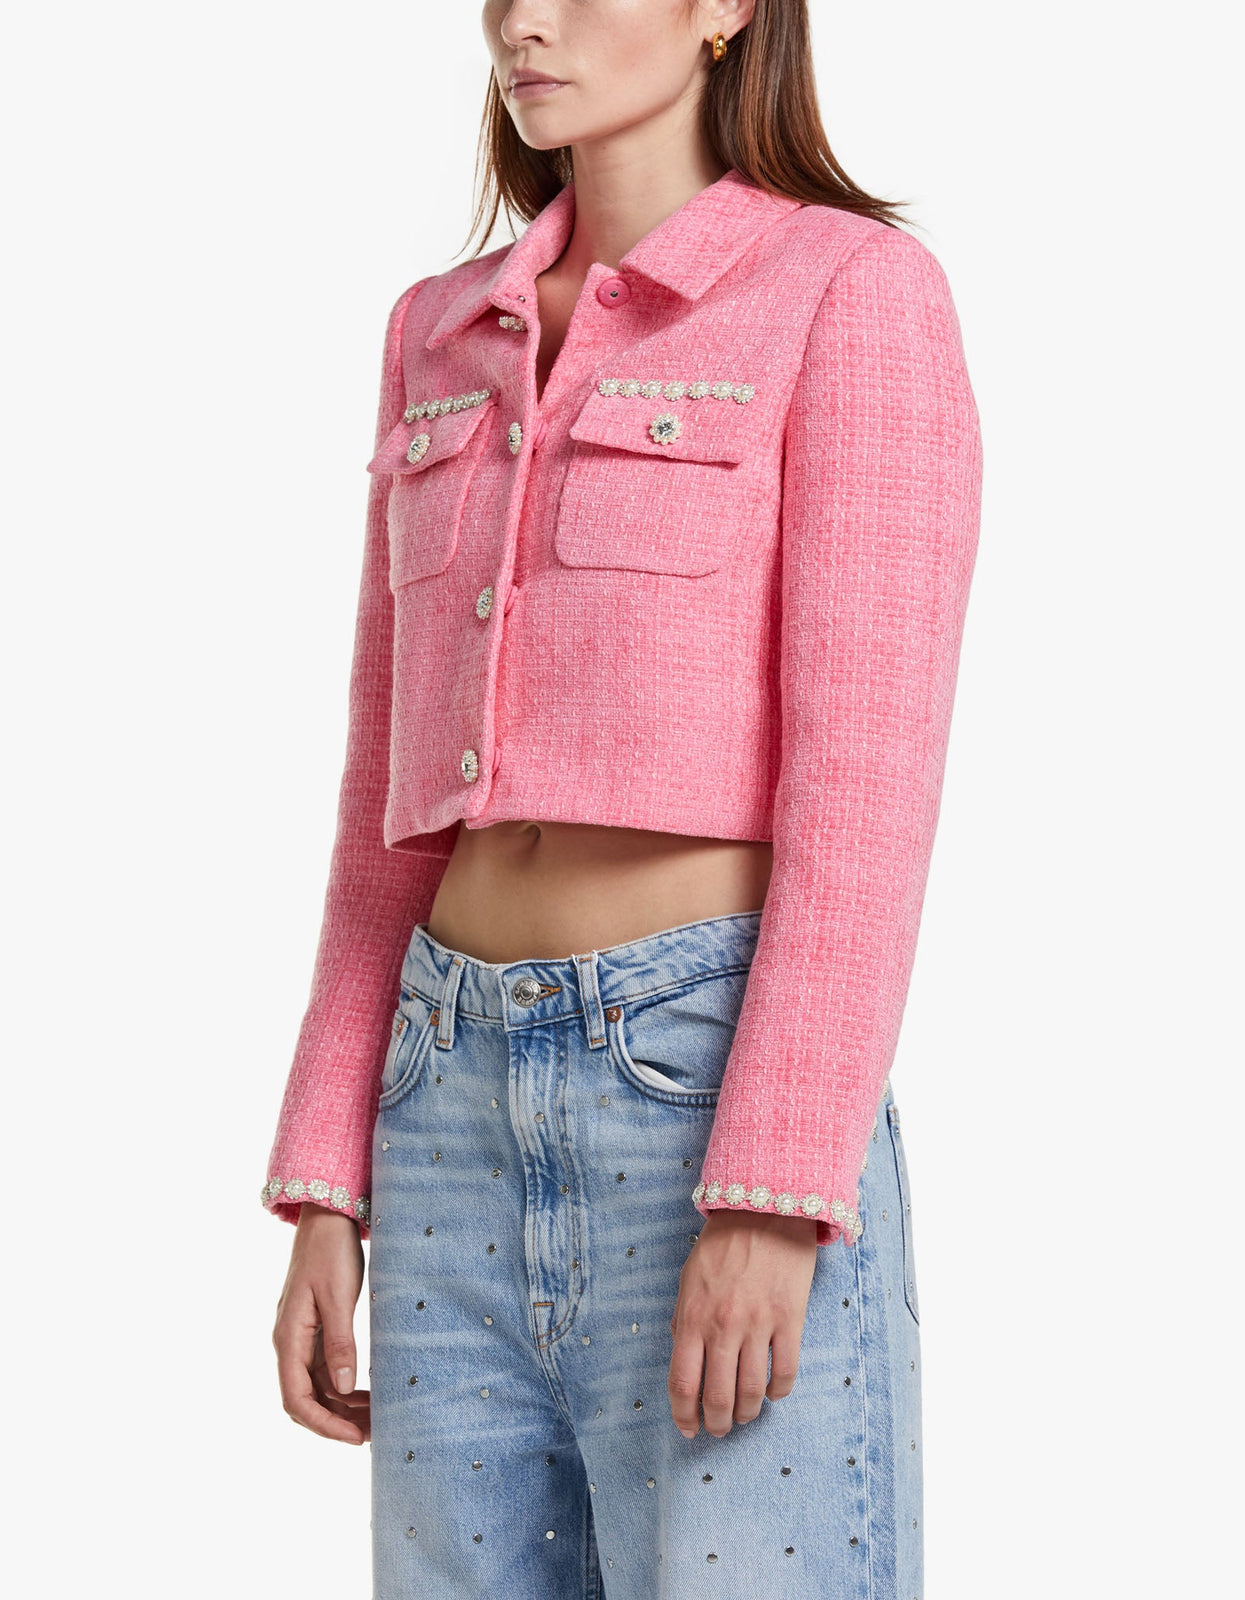 Sequin bouclé jacket in pink - Self Portrait